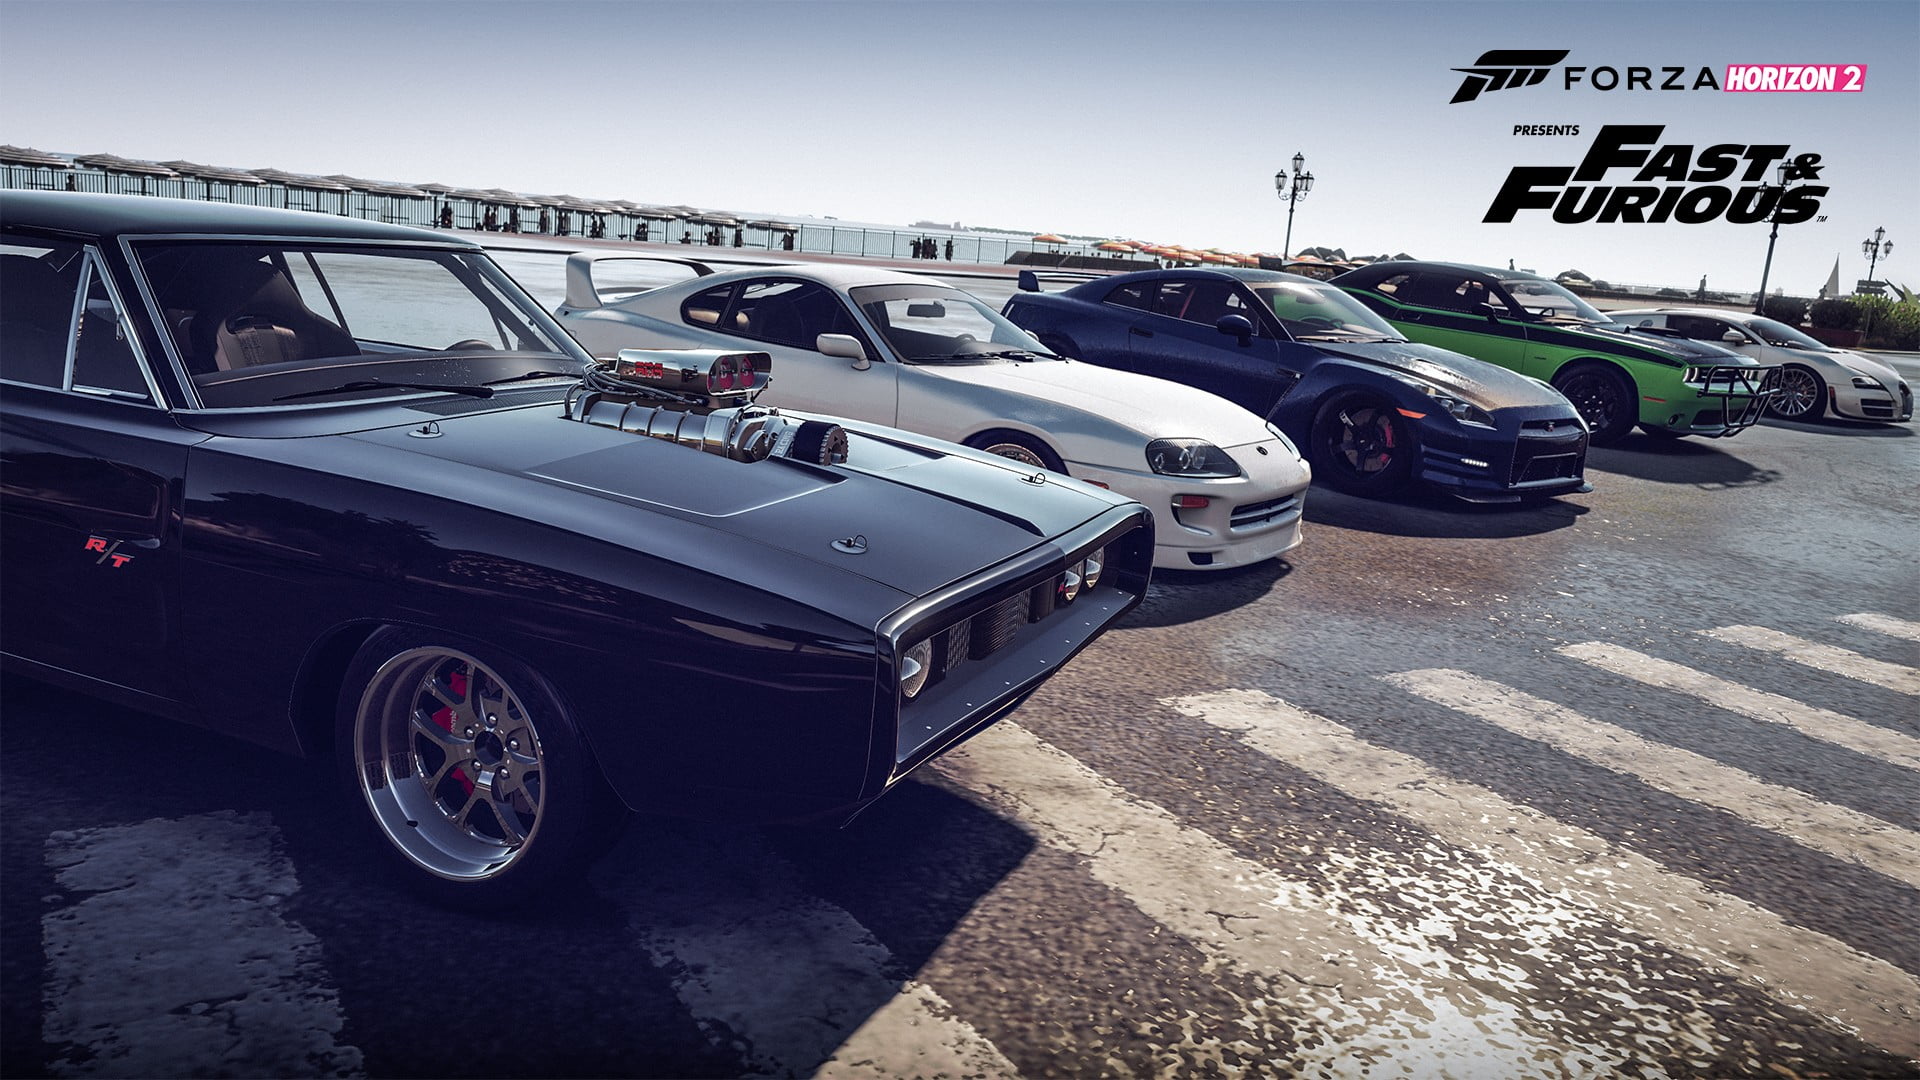 Fast & Furious wallpaper, Forza Horizon 2, Forza Motorsport, video games